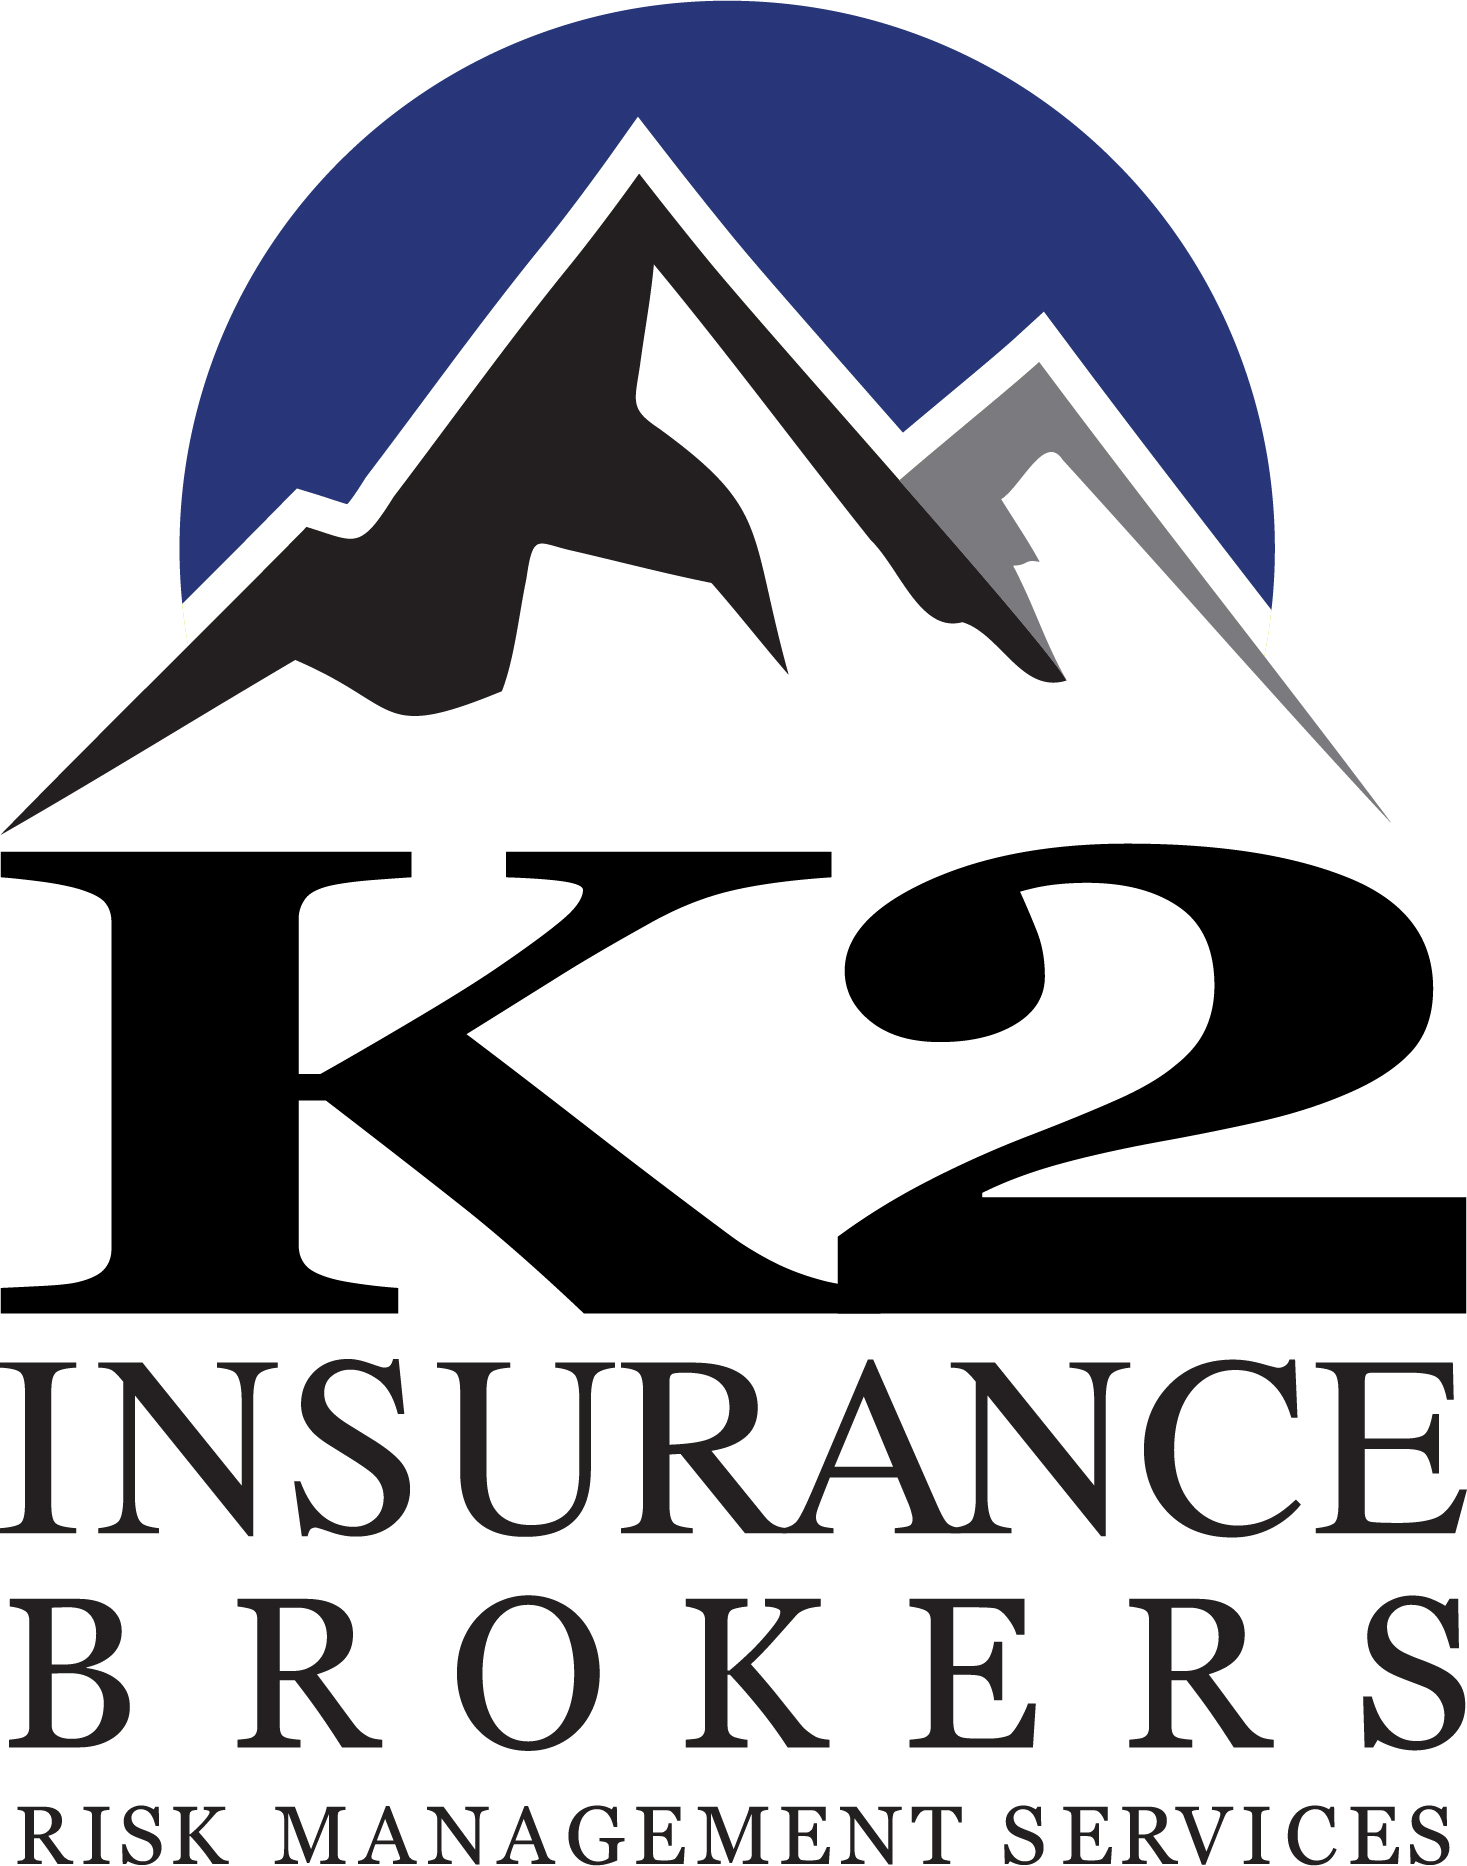 K2 Insurance Brokers & Risk Management